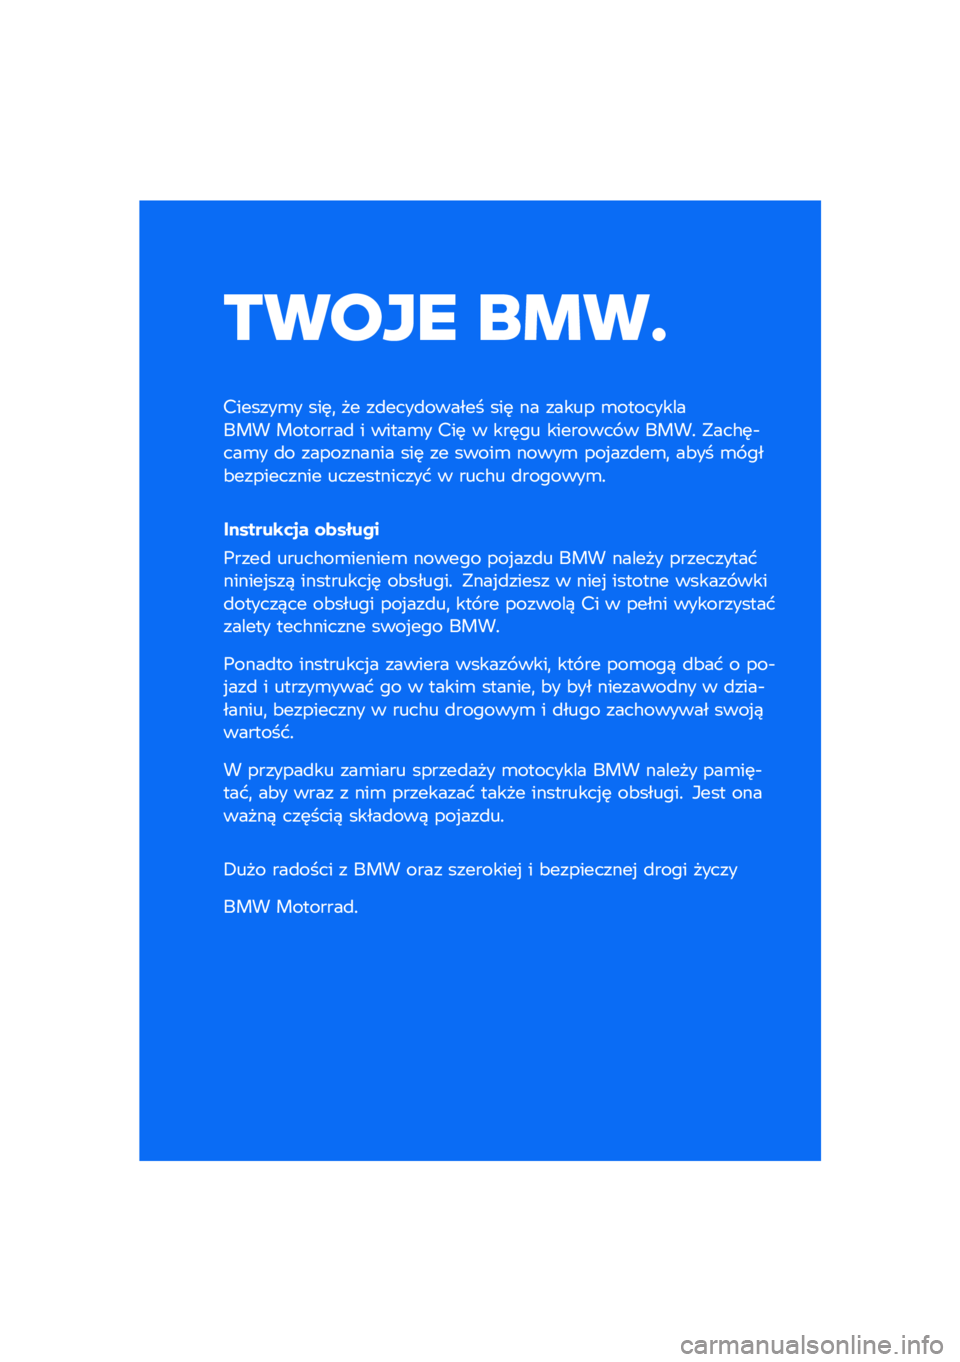 BMW MOTORRAD R NINE T 2020  Instrukcja obsługi (in Polish) ����� ��\b��	
�������\b� ���	�
 �� ��
����
������ ���	 �� ����� �\b����������� ��������
 � �����\b� ���	 � ���	�� �������� �